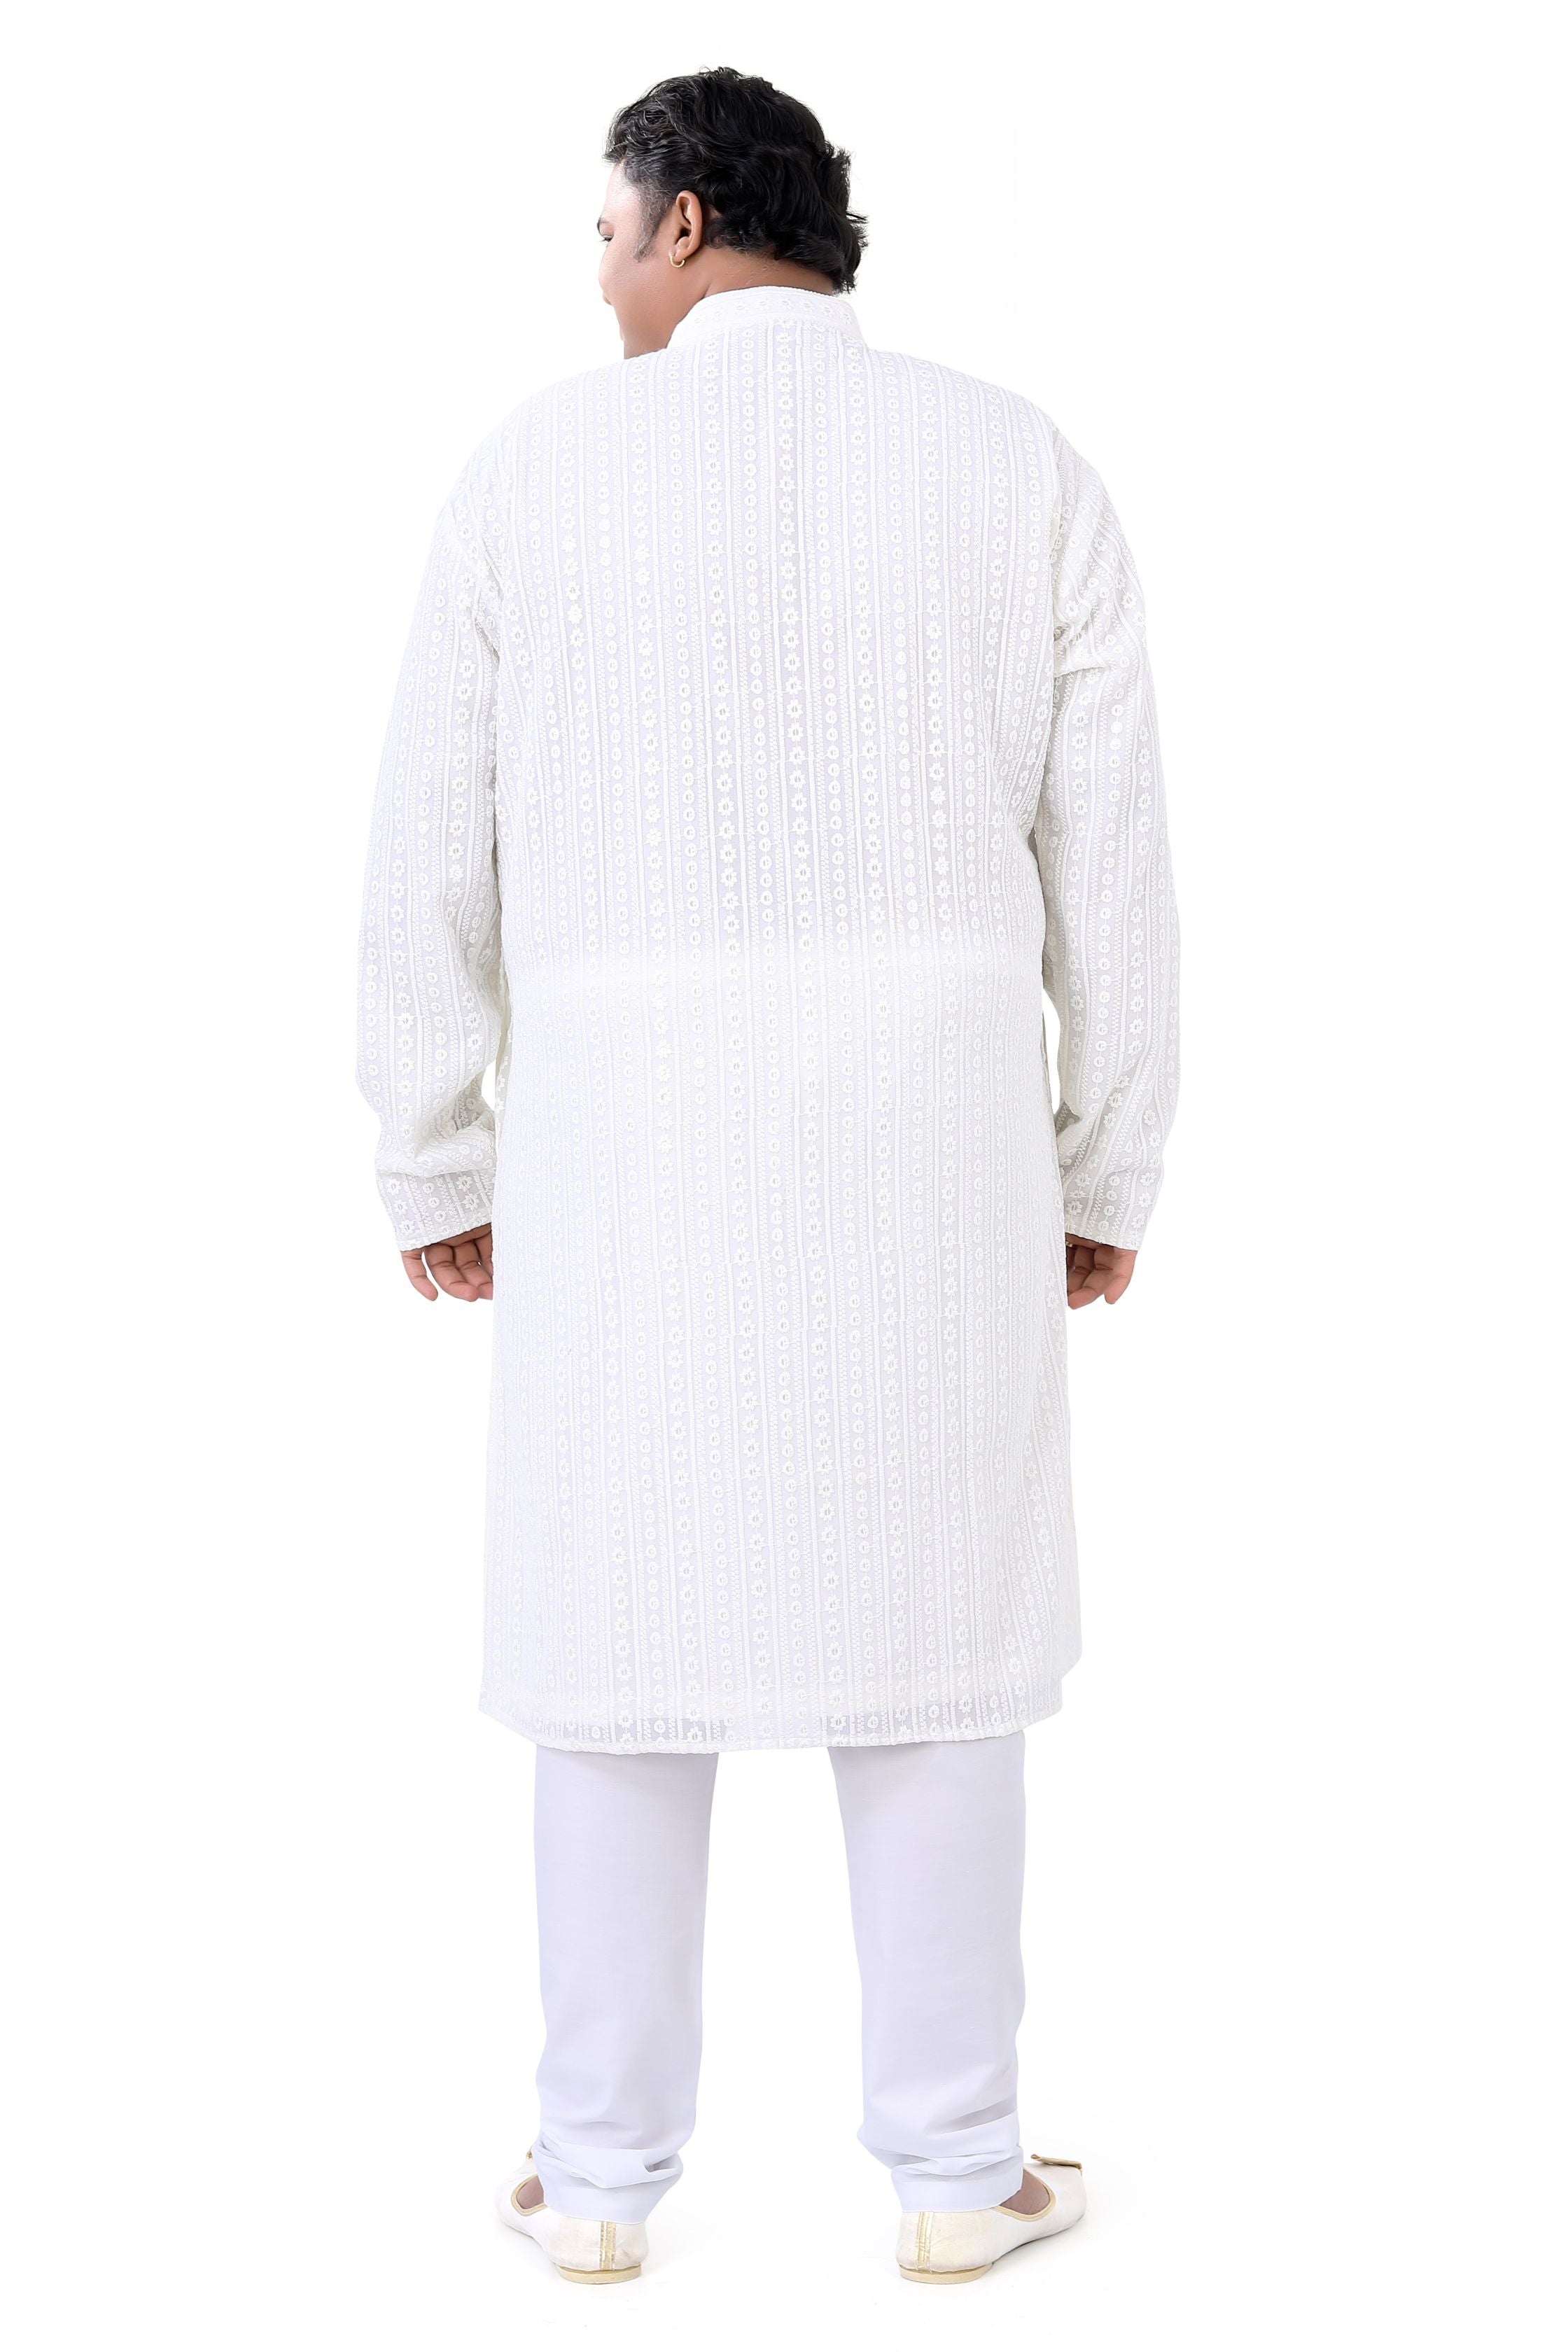 Plus Size Lucknowi Kurta set in Cream color - Premium kurta pajama from Dapper Ethnic - Just $99! Shop now at Dulhan Exclusives